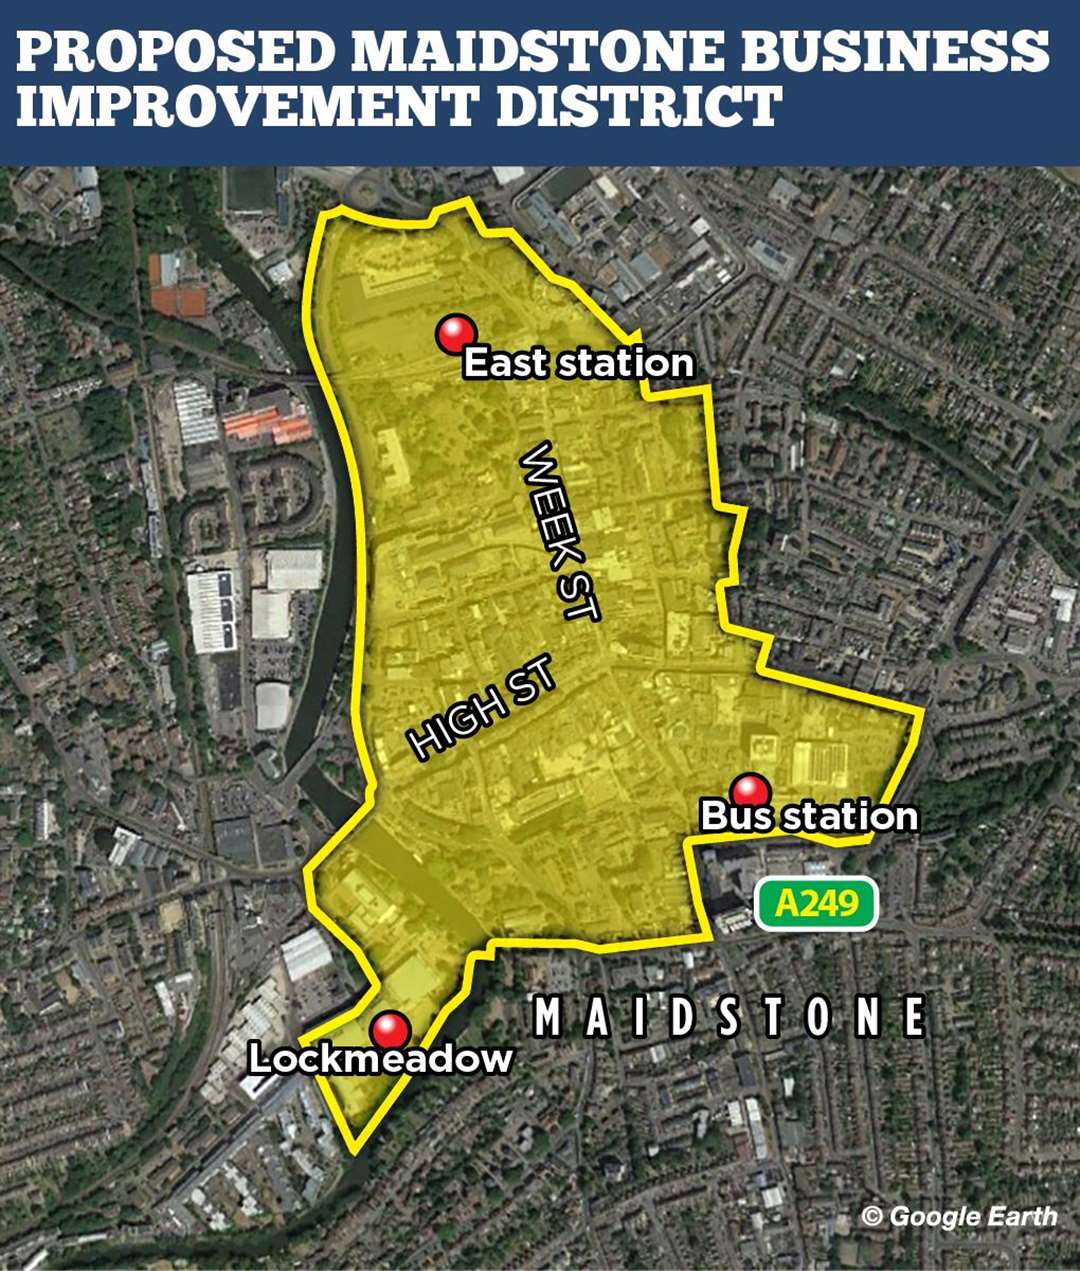 The proposed new Maidstone BID area